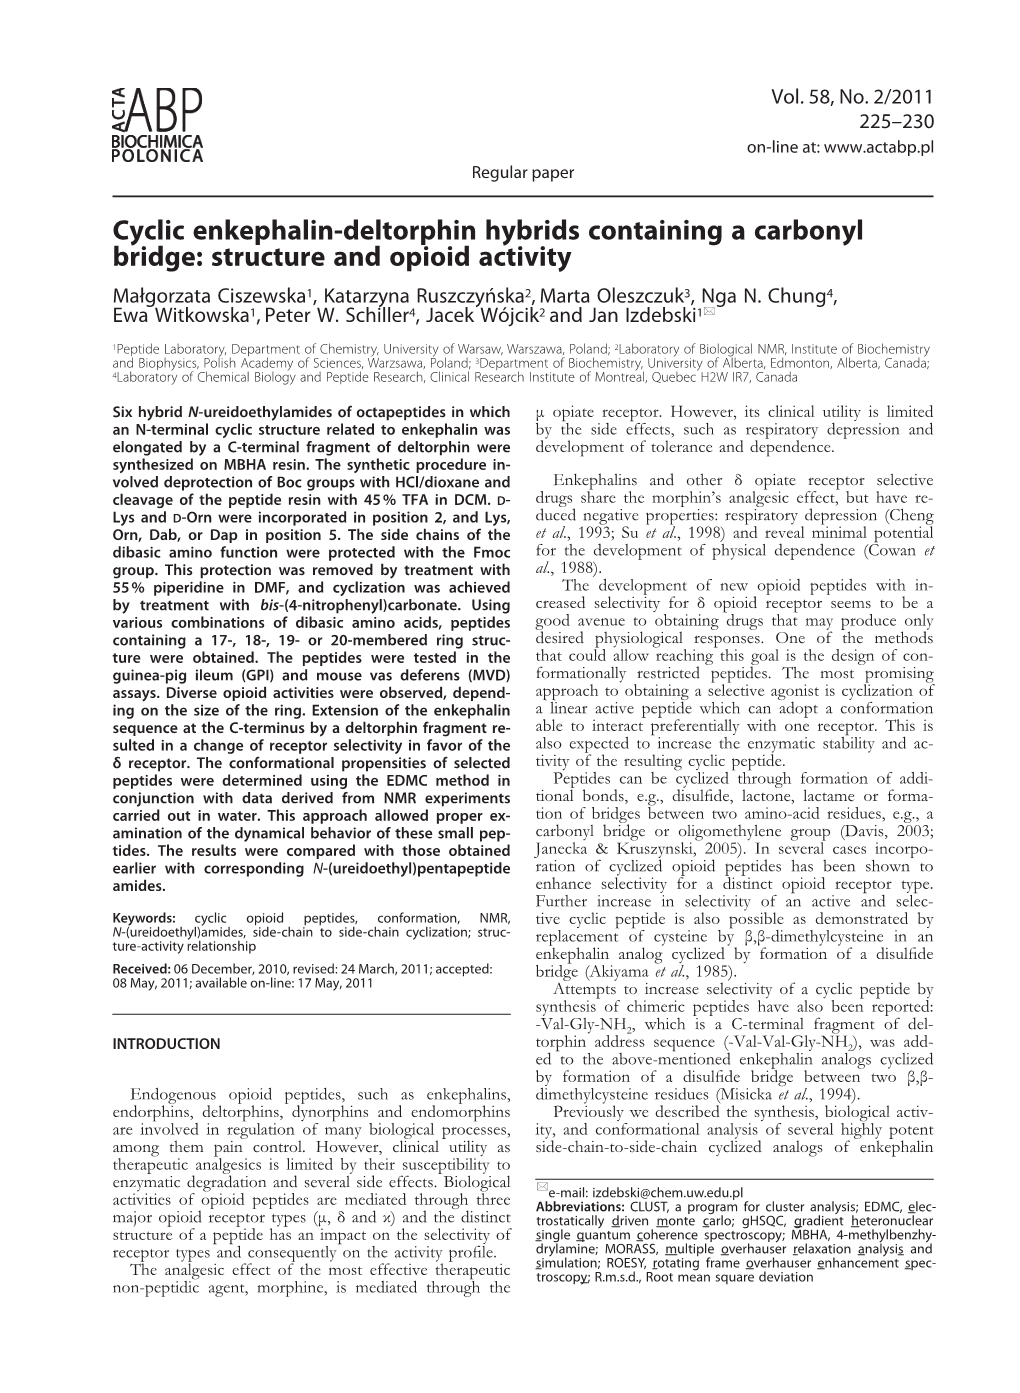 Cyclic Enkephalin-Deltorphin Hybrids Containing a Carbonyl Bridge